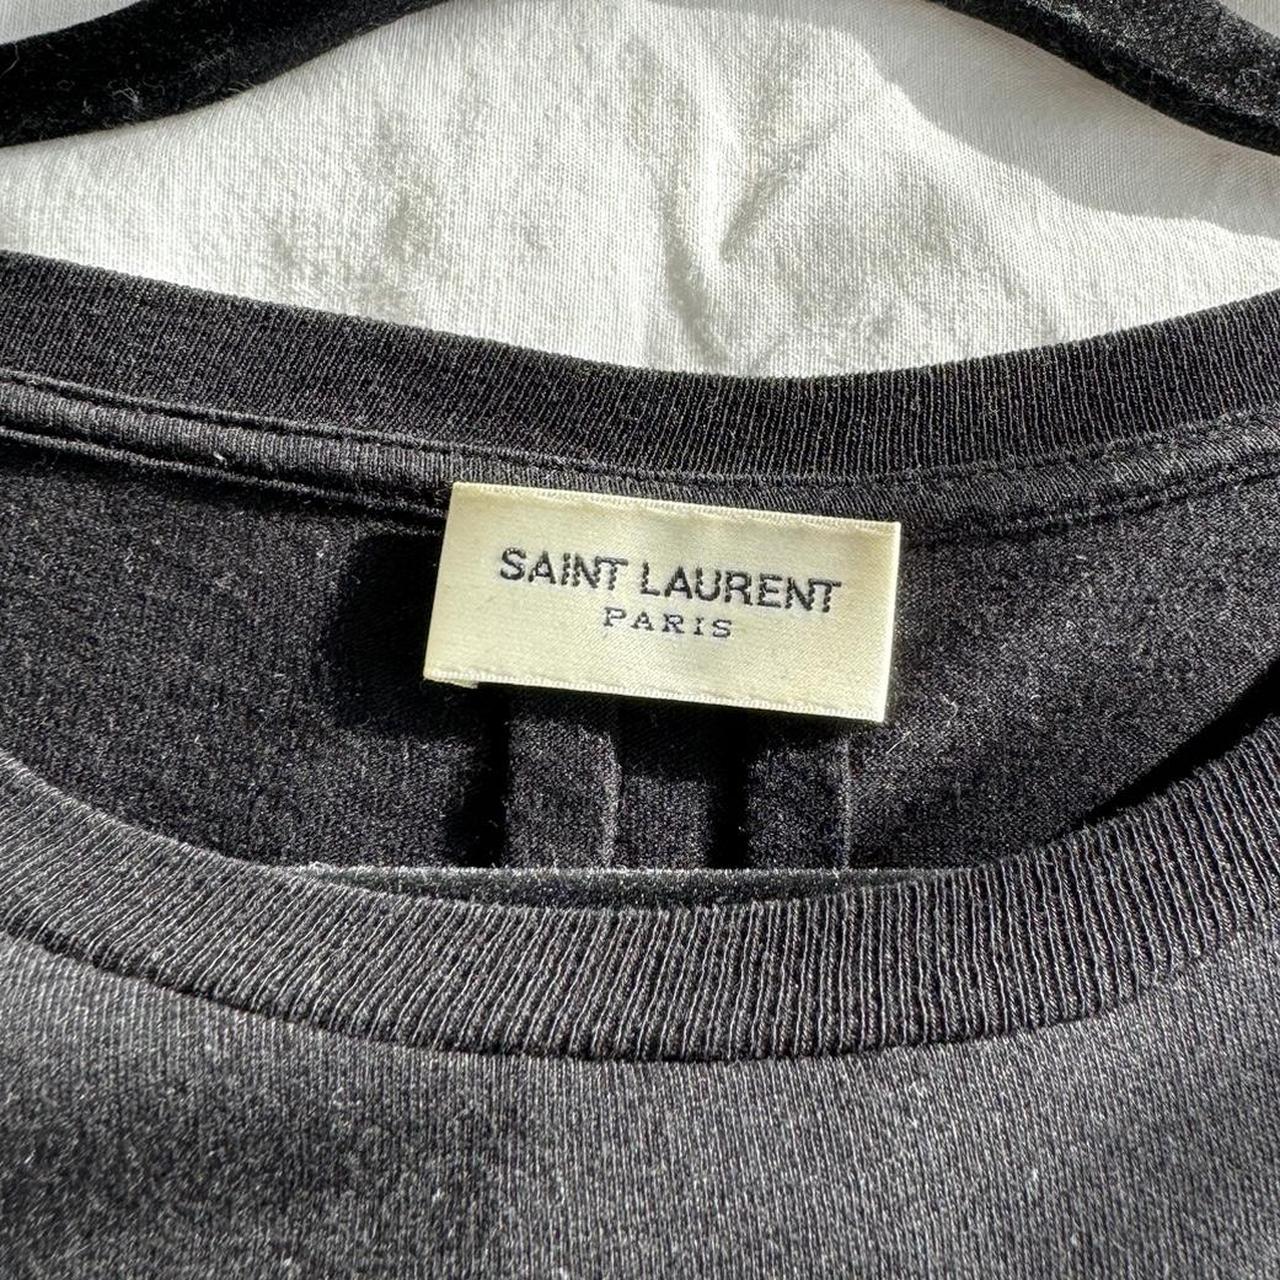 Saint Laurent Shirt Size: Large Only worn for... - Depop